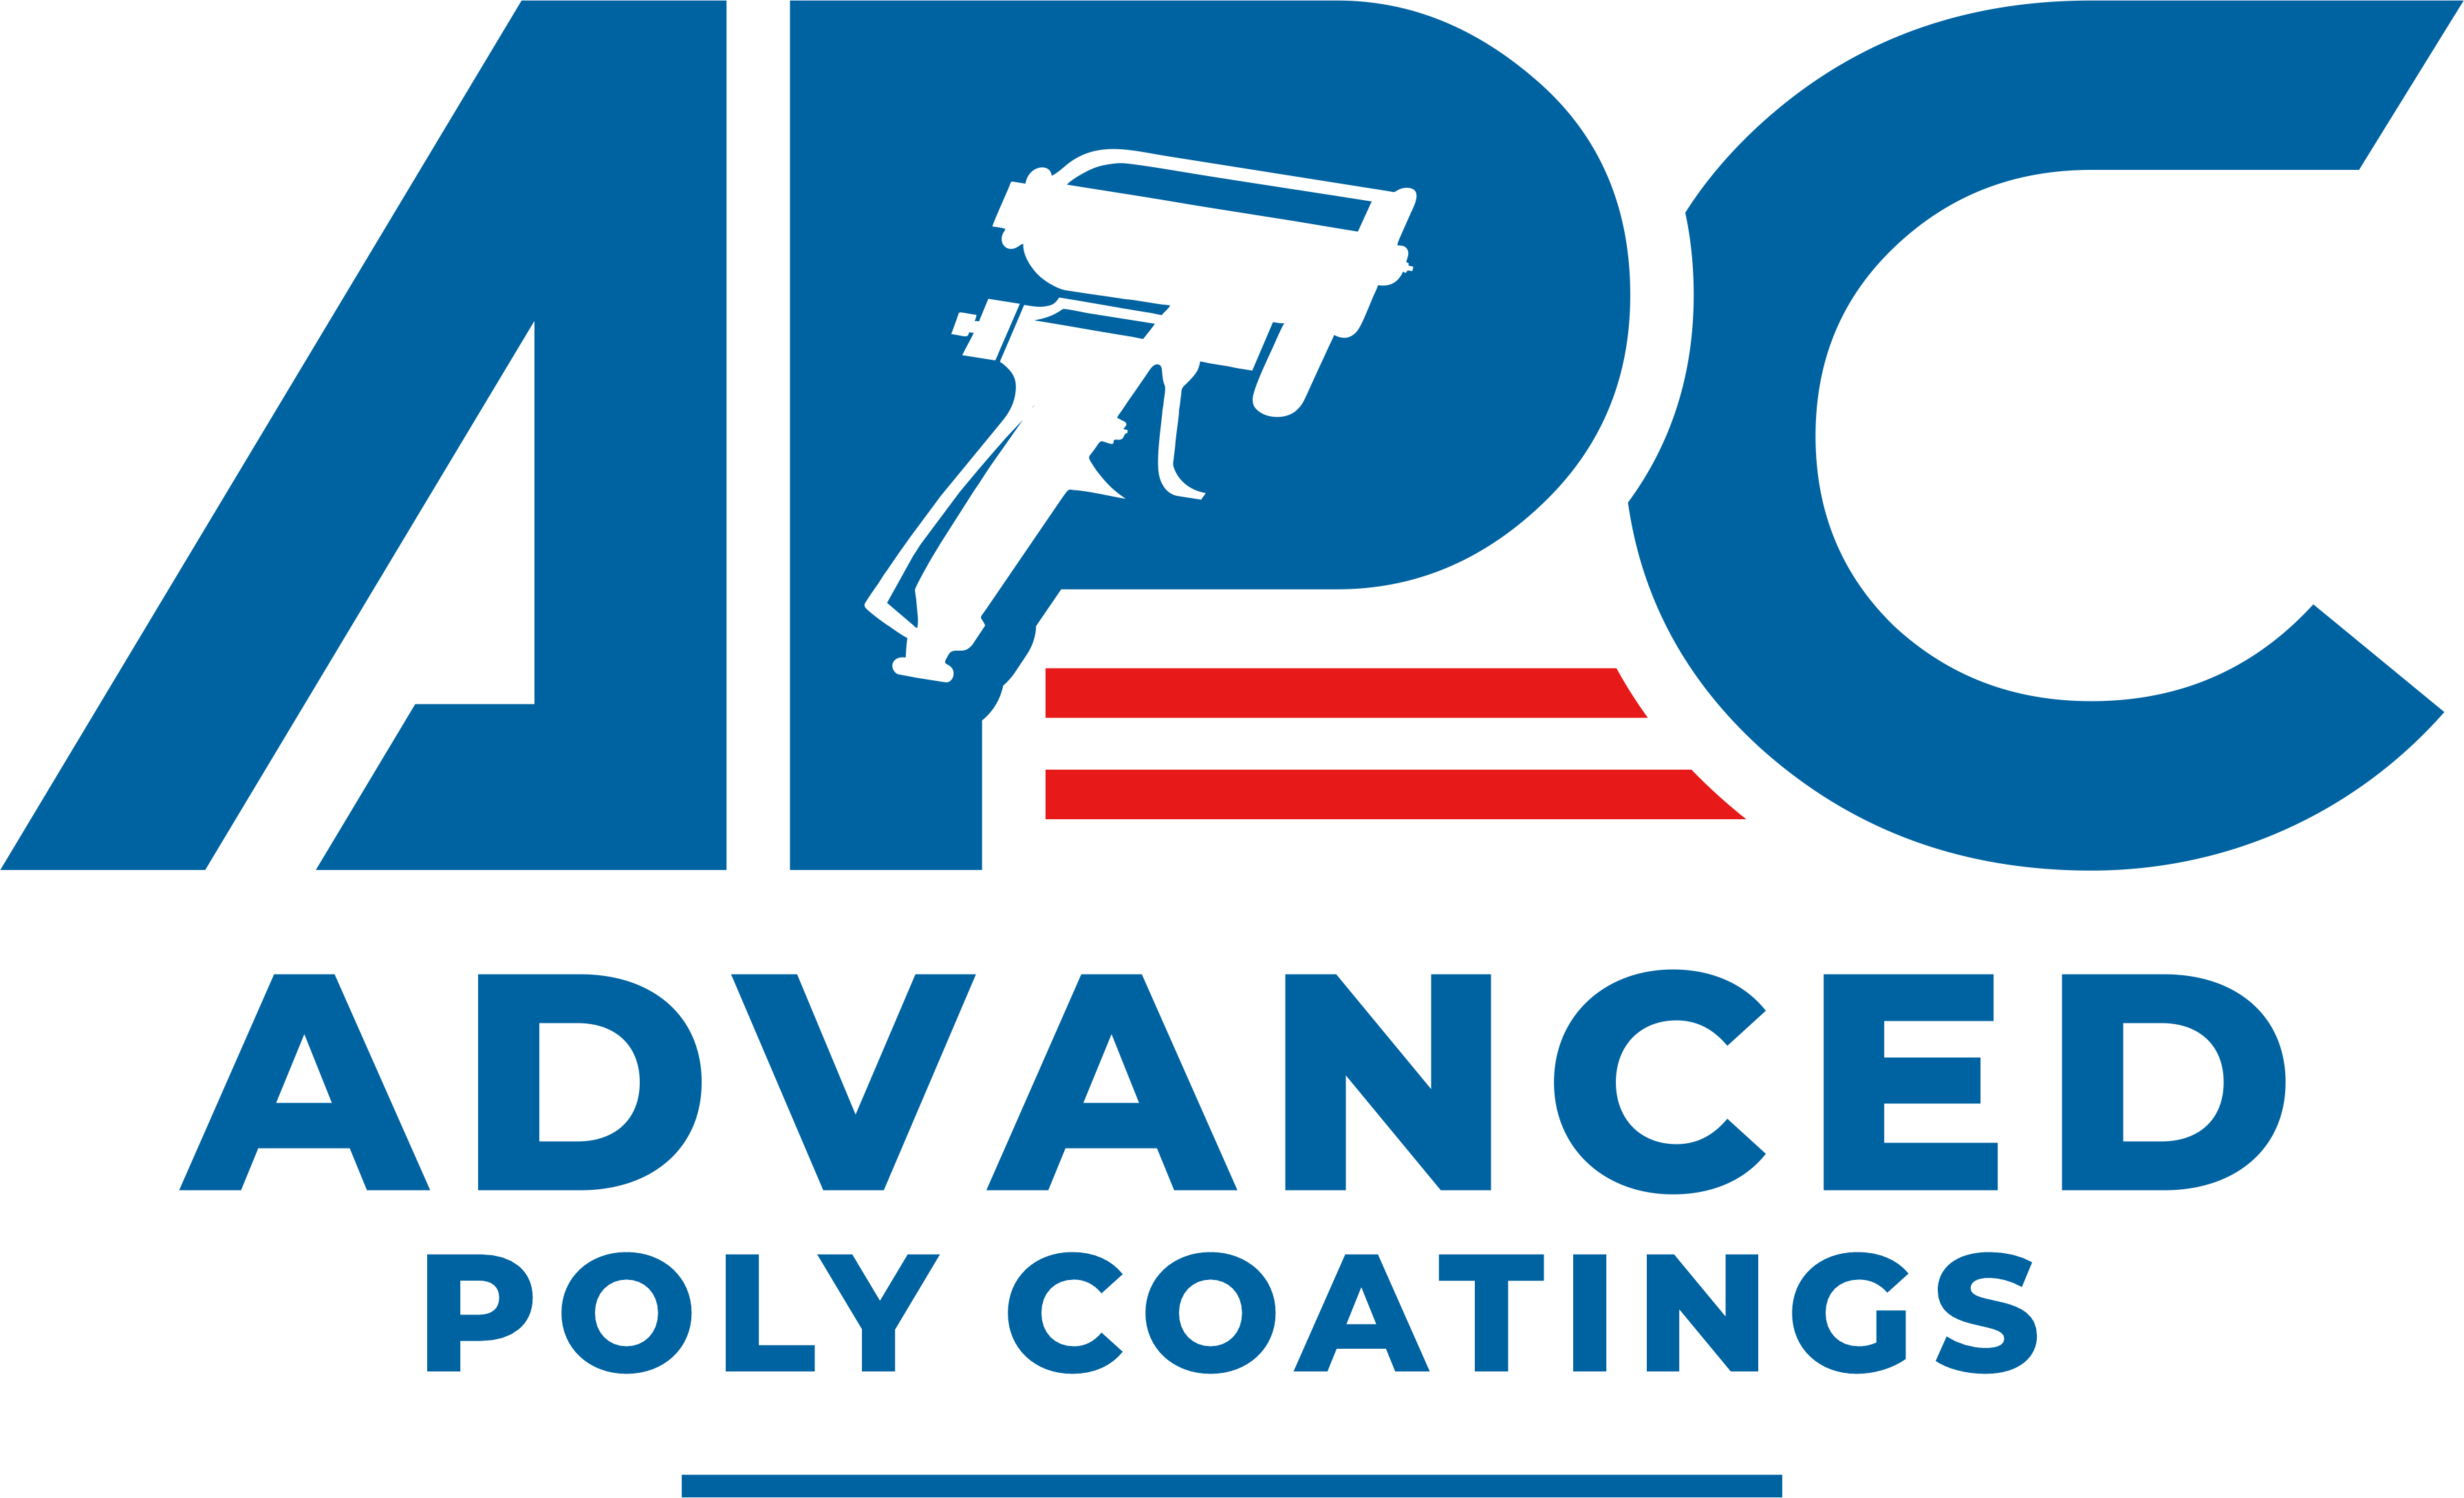 Advanced Poly Coatings & Liners Logo